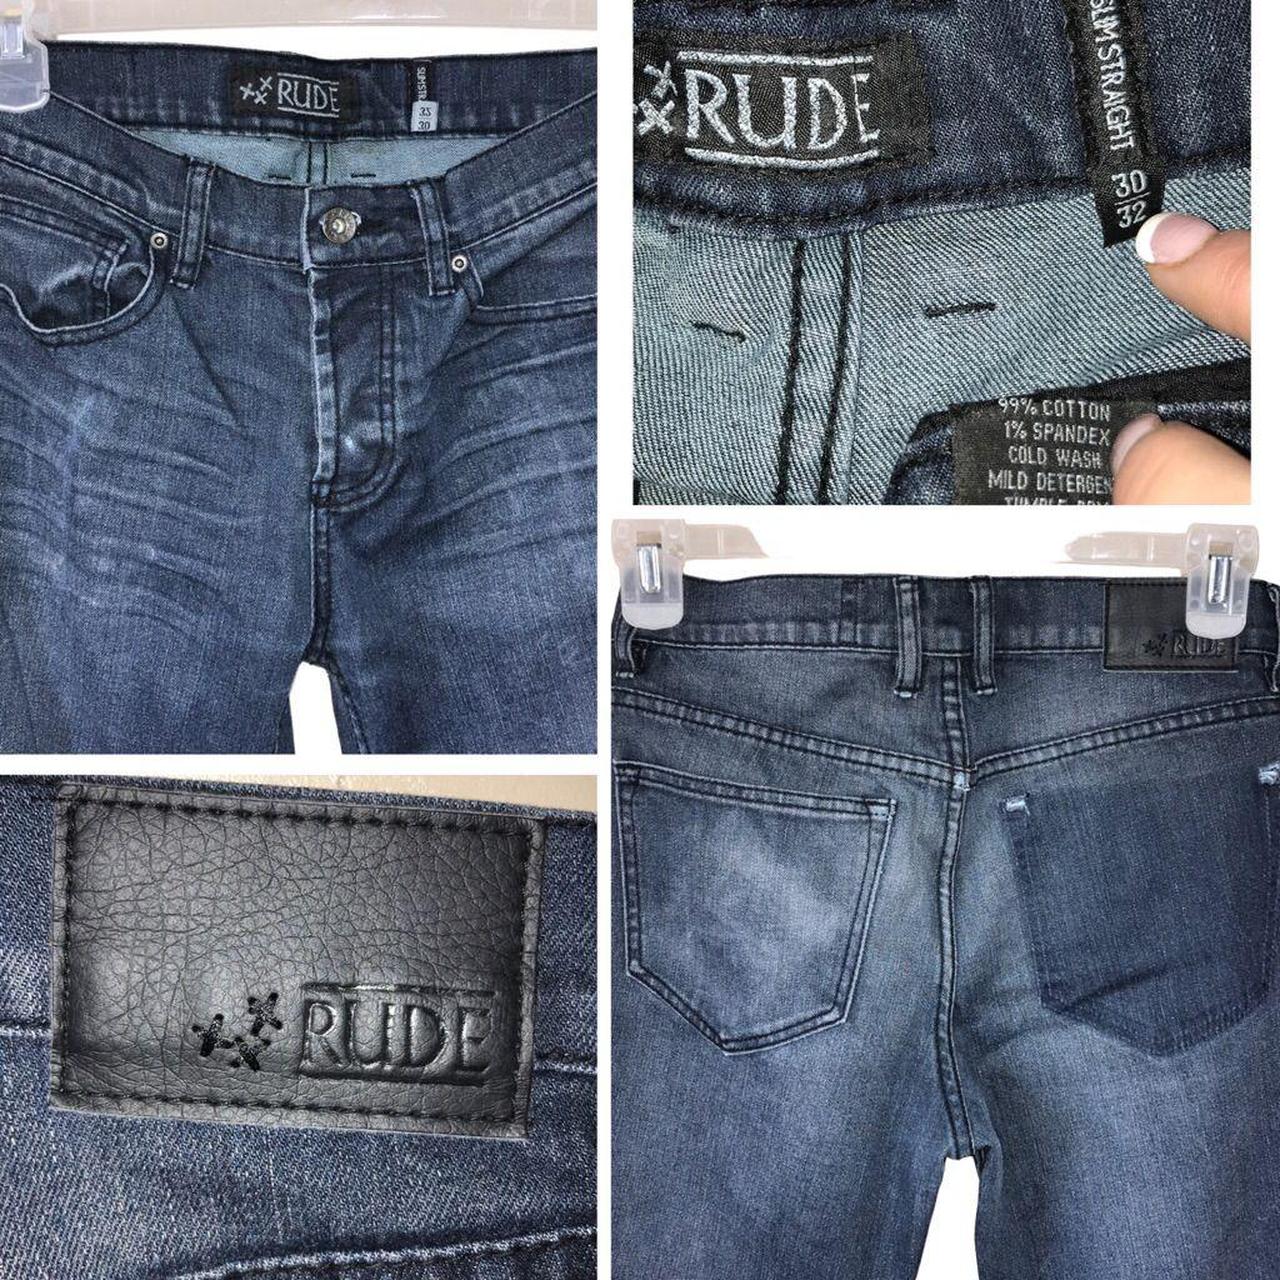 Product Image 3 - Rude XXX mens denim jeans